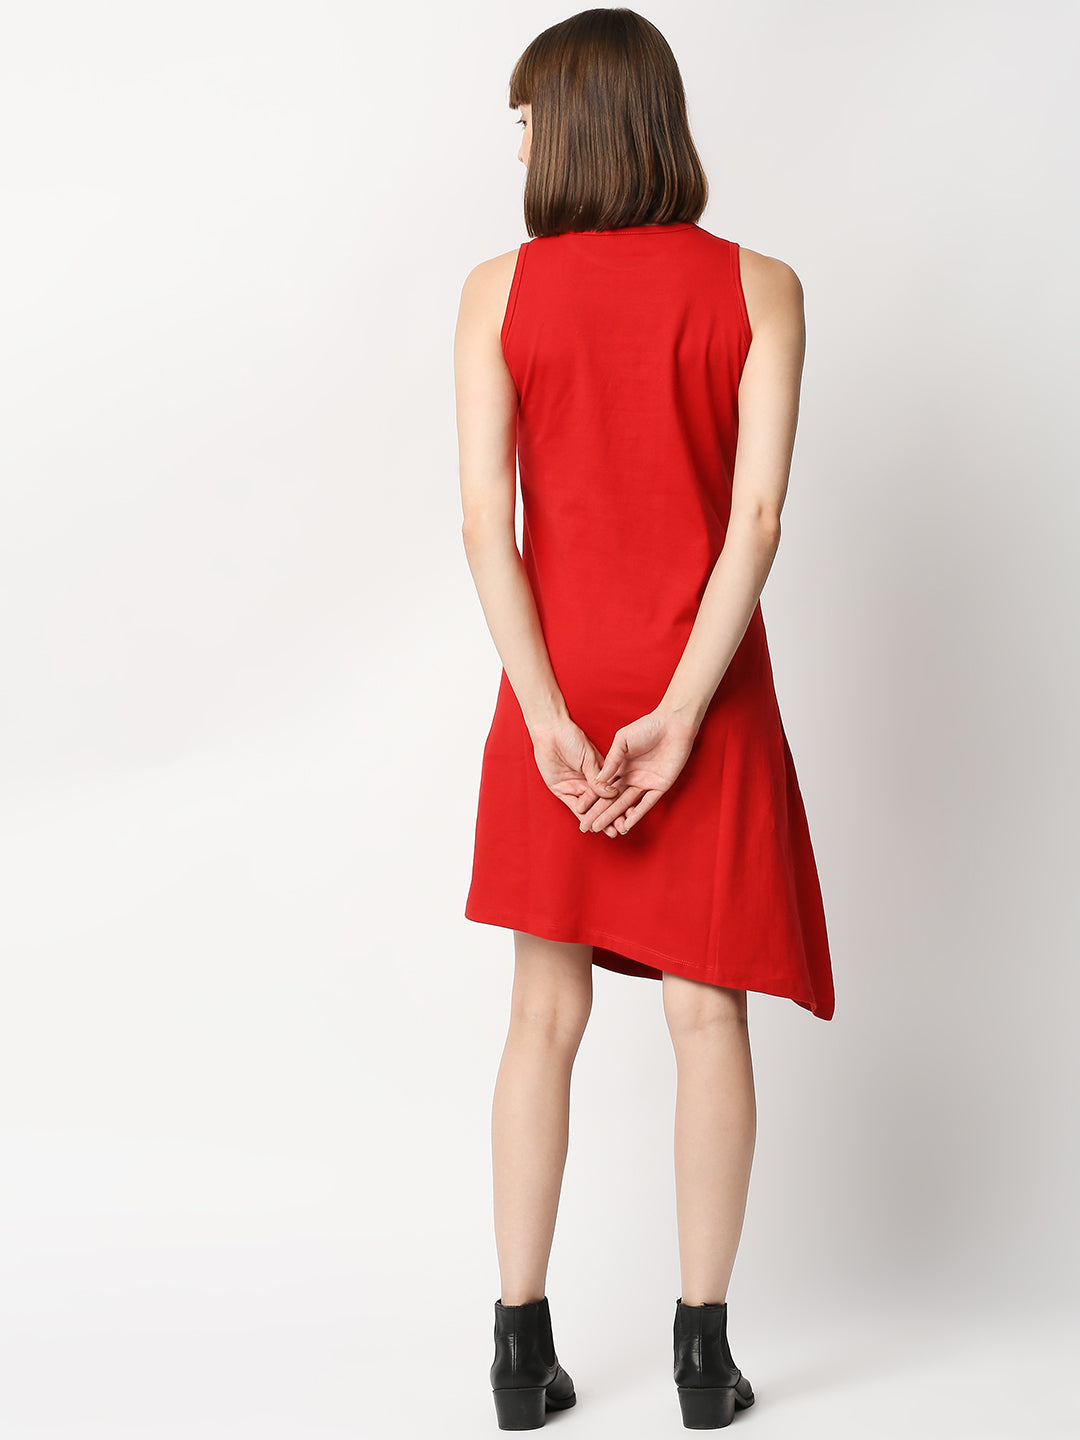 Buy BLAMBLACK Women Round neck Dresses Cherry Red Color Solid Sleeveless